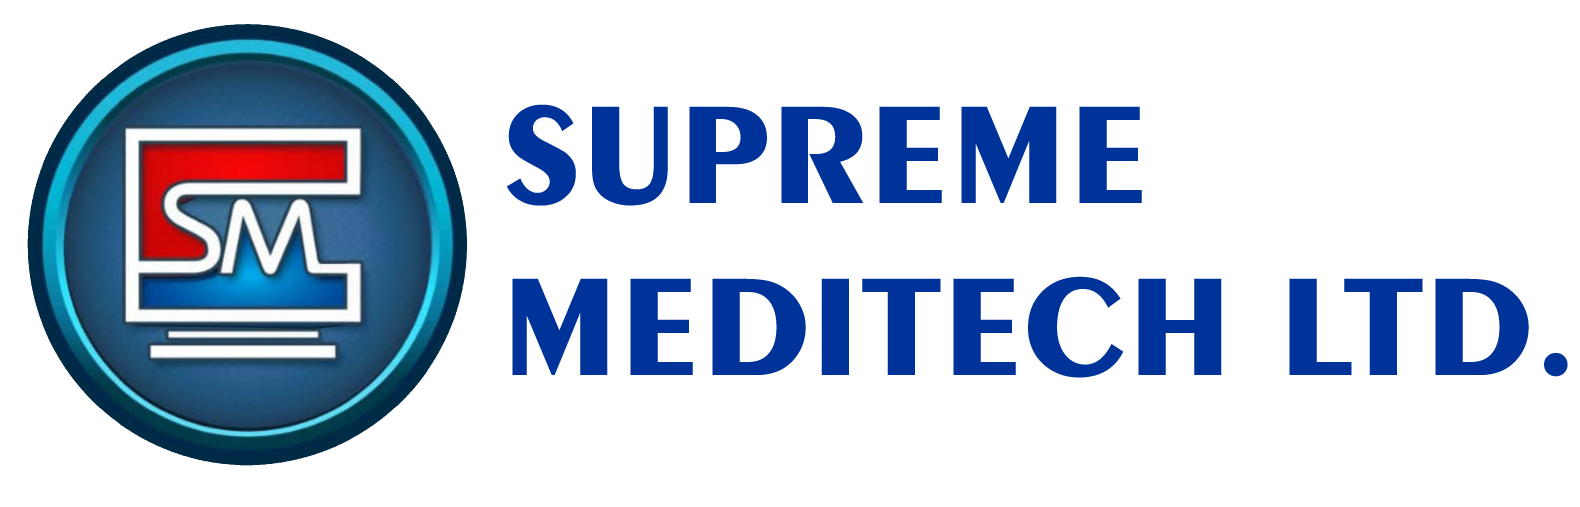 Supreme Meditech